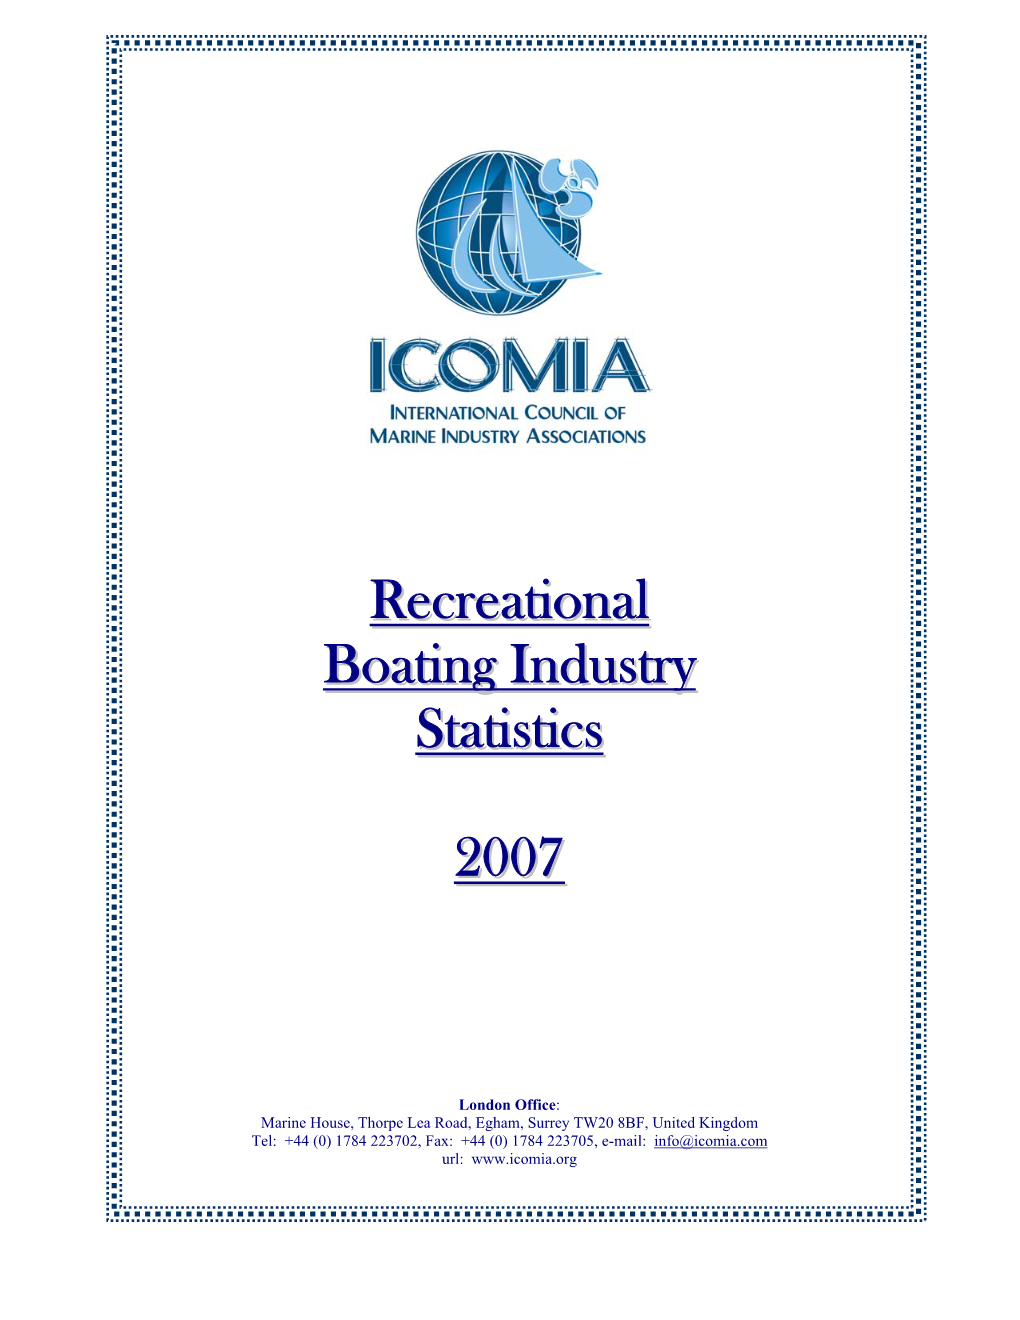 Recreational Boating Industry Statistics 2007